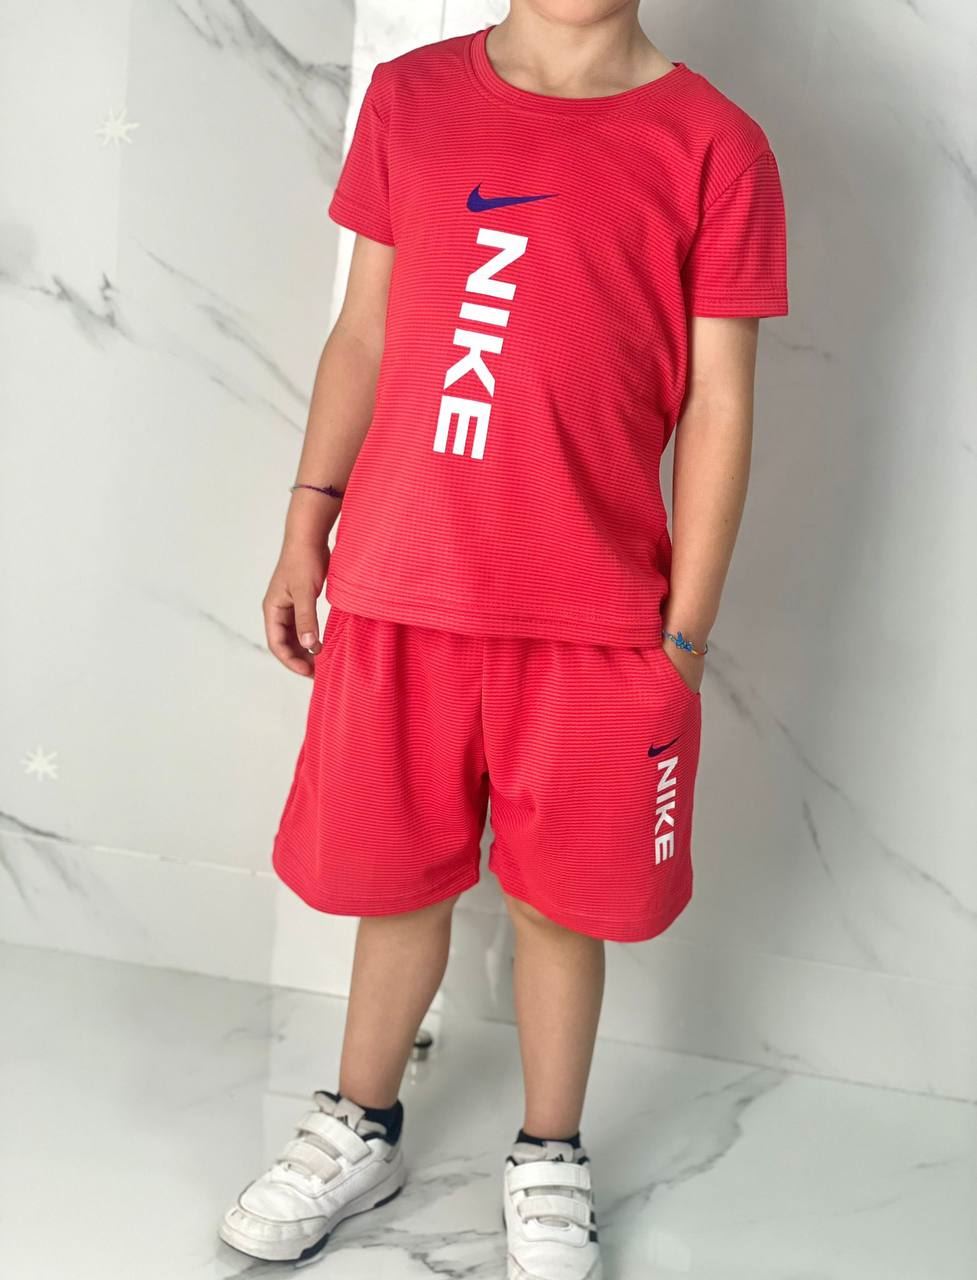 Conjunto de niño Nike - Imagen 5